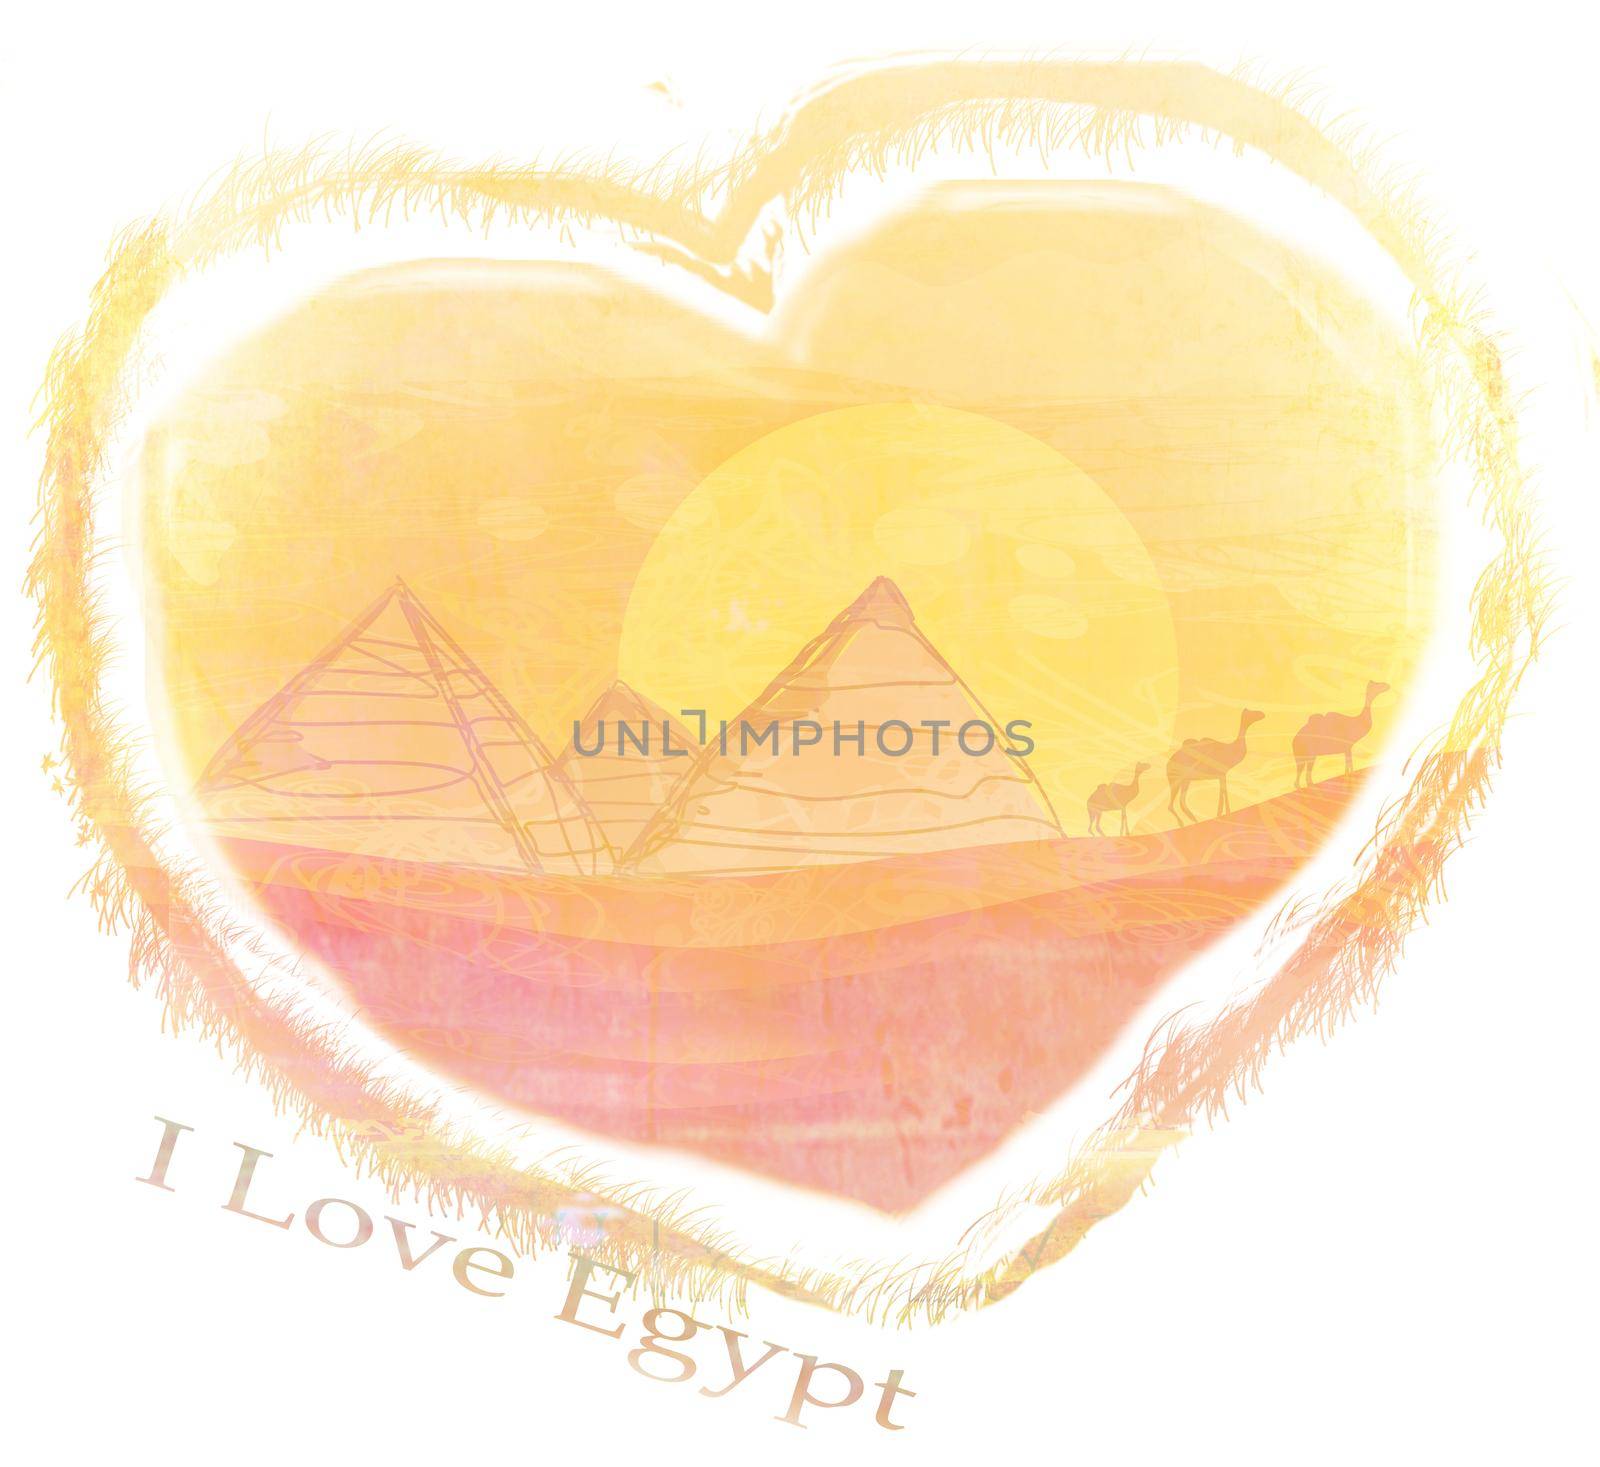 I Love Egypt design by JackyBrown